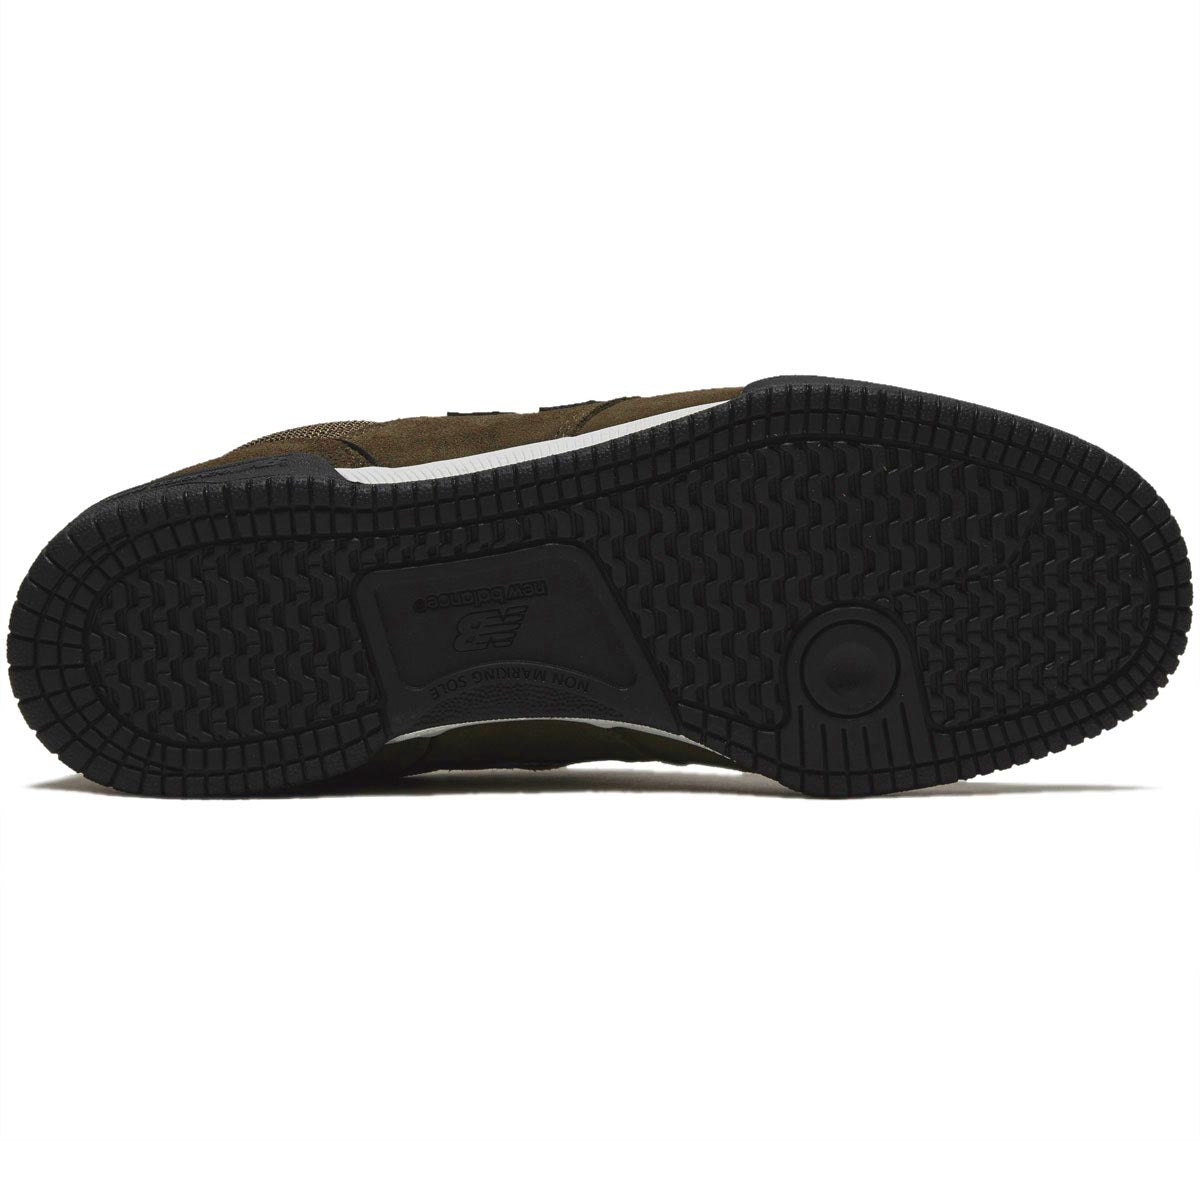 New Balance 600 Tom Knox Shoes - Olive/Black image 4